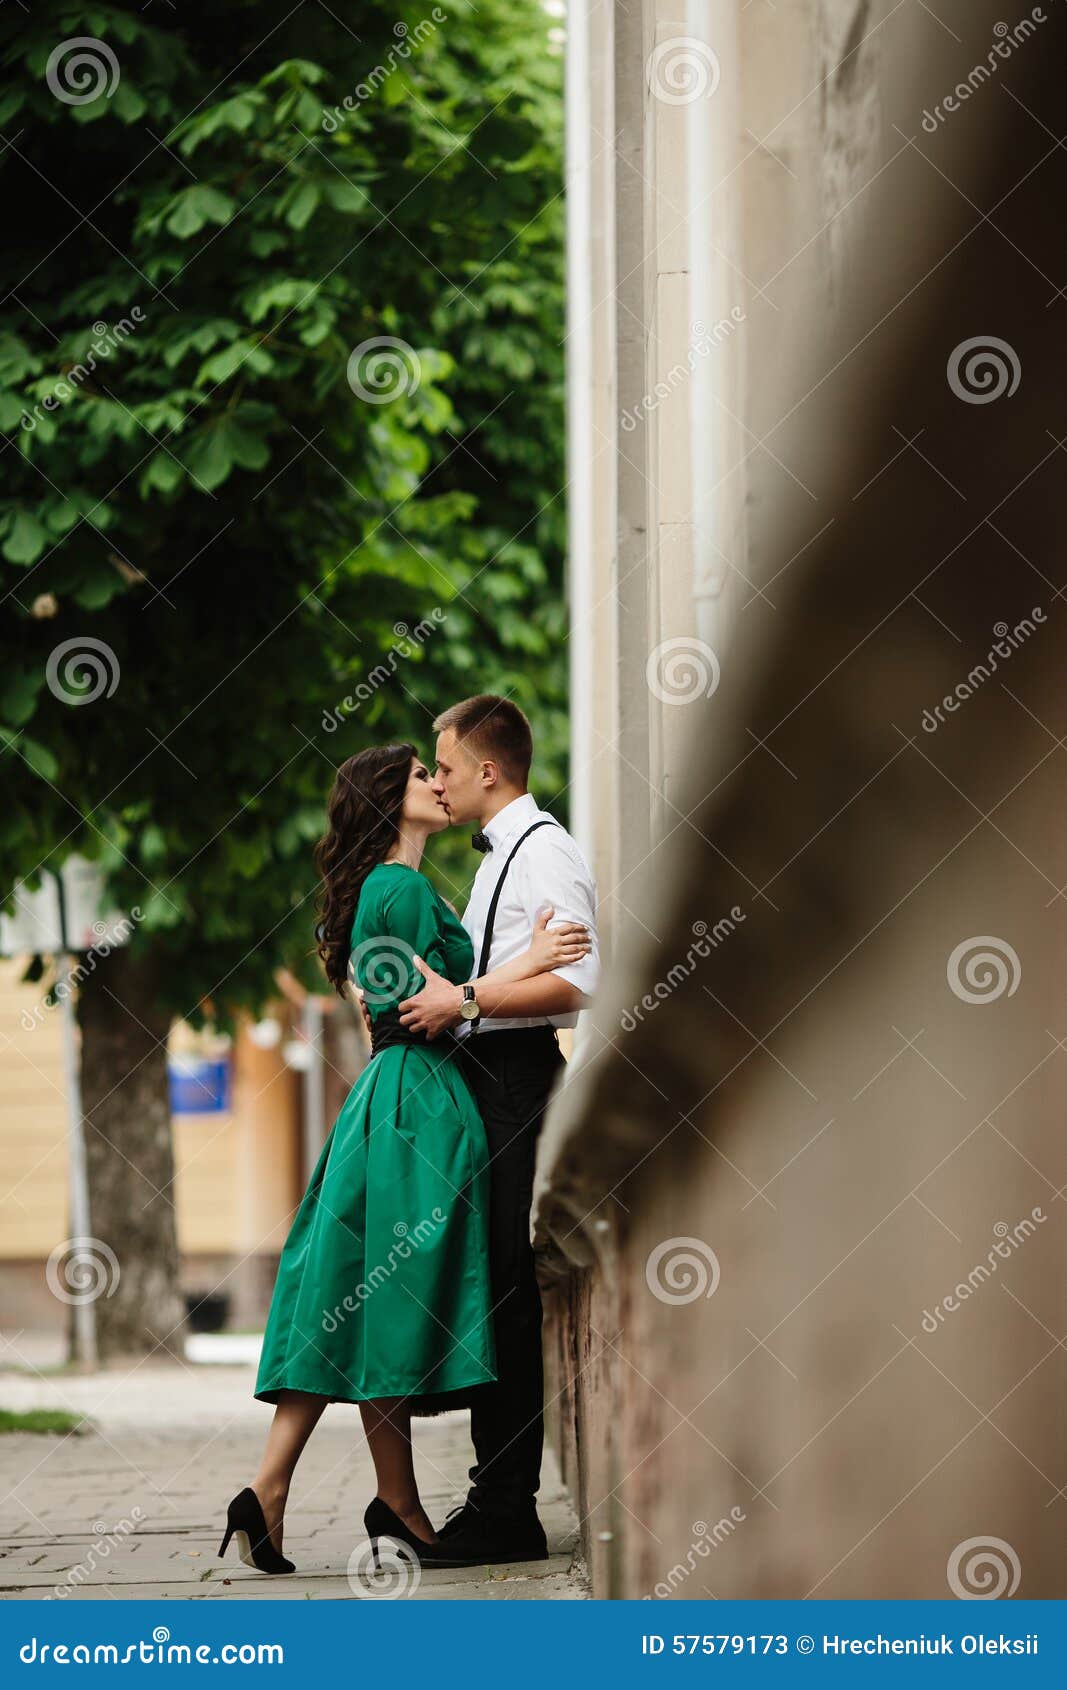 https://thumbs.dreamstime.com/z/european-beautiful-couple-posing-street-photo-kissing-57579173.jpg